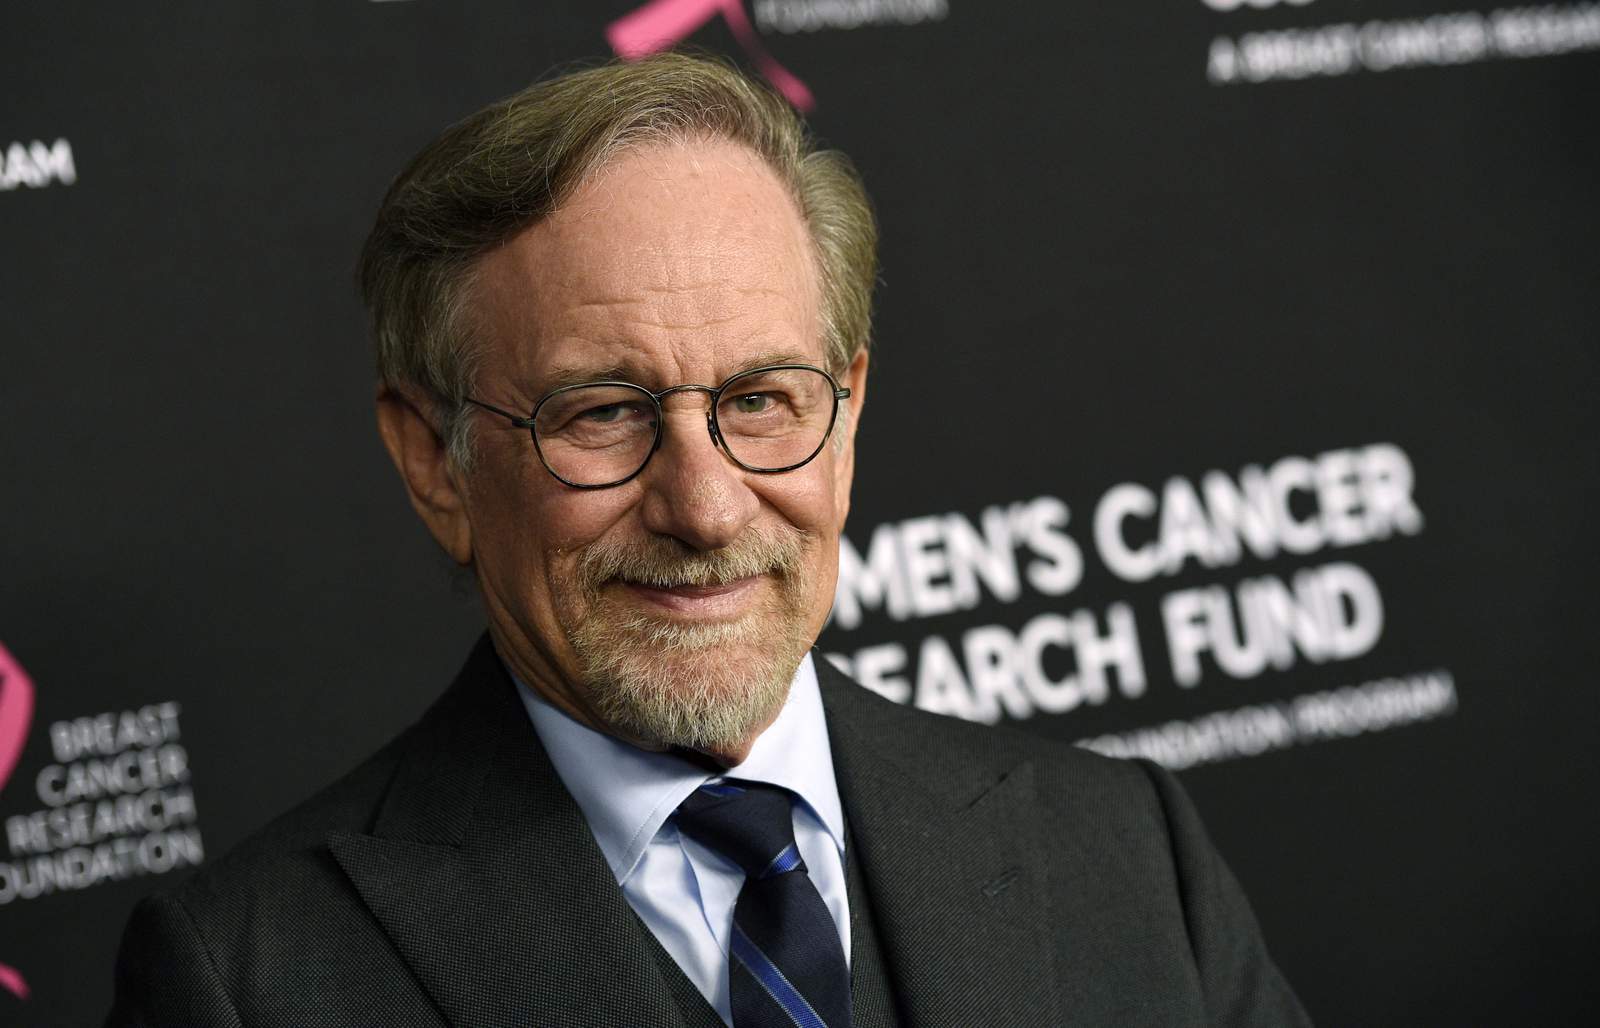 Spielberg donates Genesis Prize money to justice nonprofits